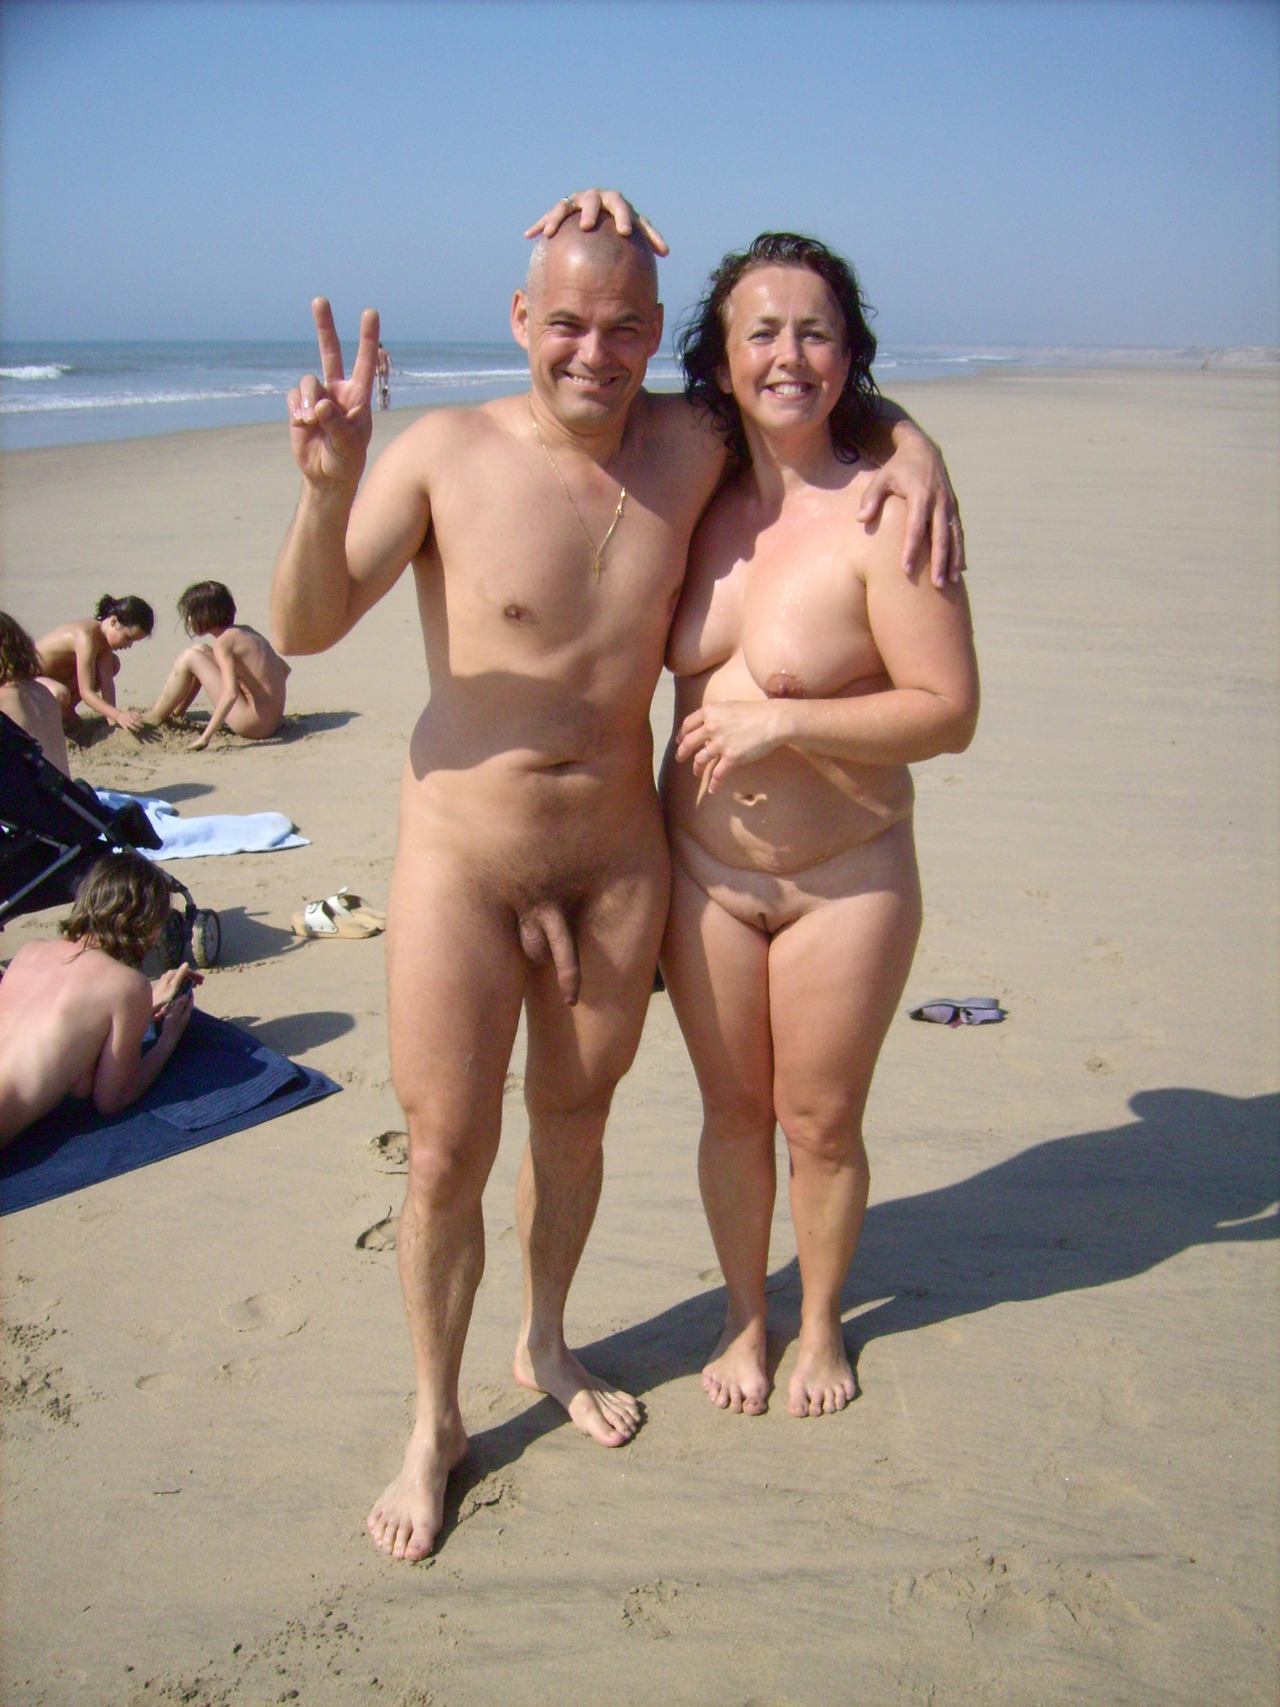 https://www.nudismlife.com/galleries/nudists_and_nude/nudists_couple/nudists_nude_naturists_couple_2117.jpg